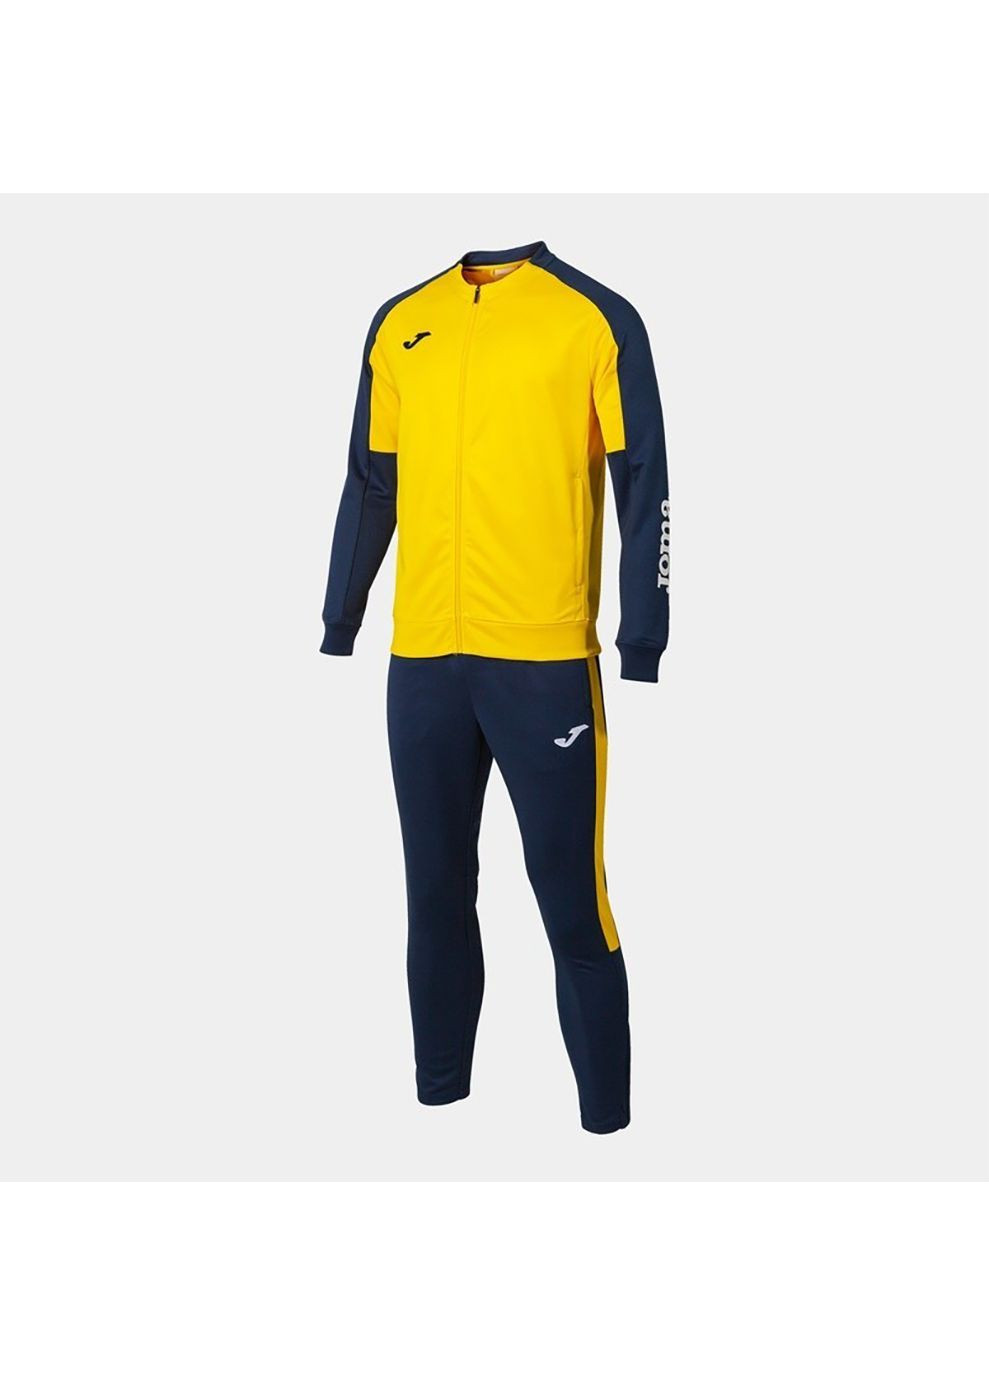 Спортивный костюм ECO CHAMPION желтый,синий Joma (282616121)